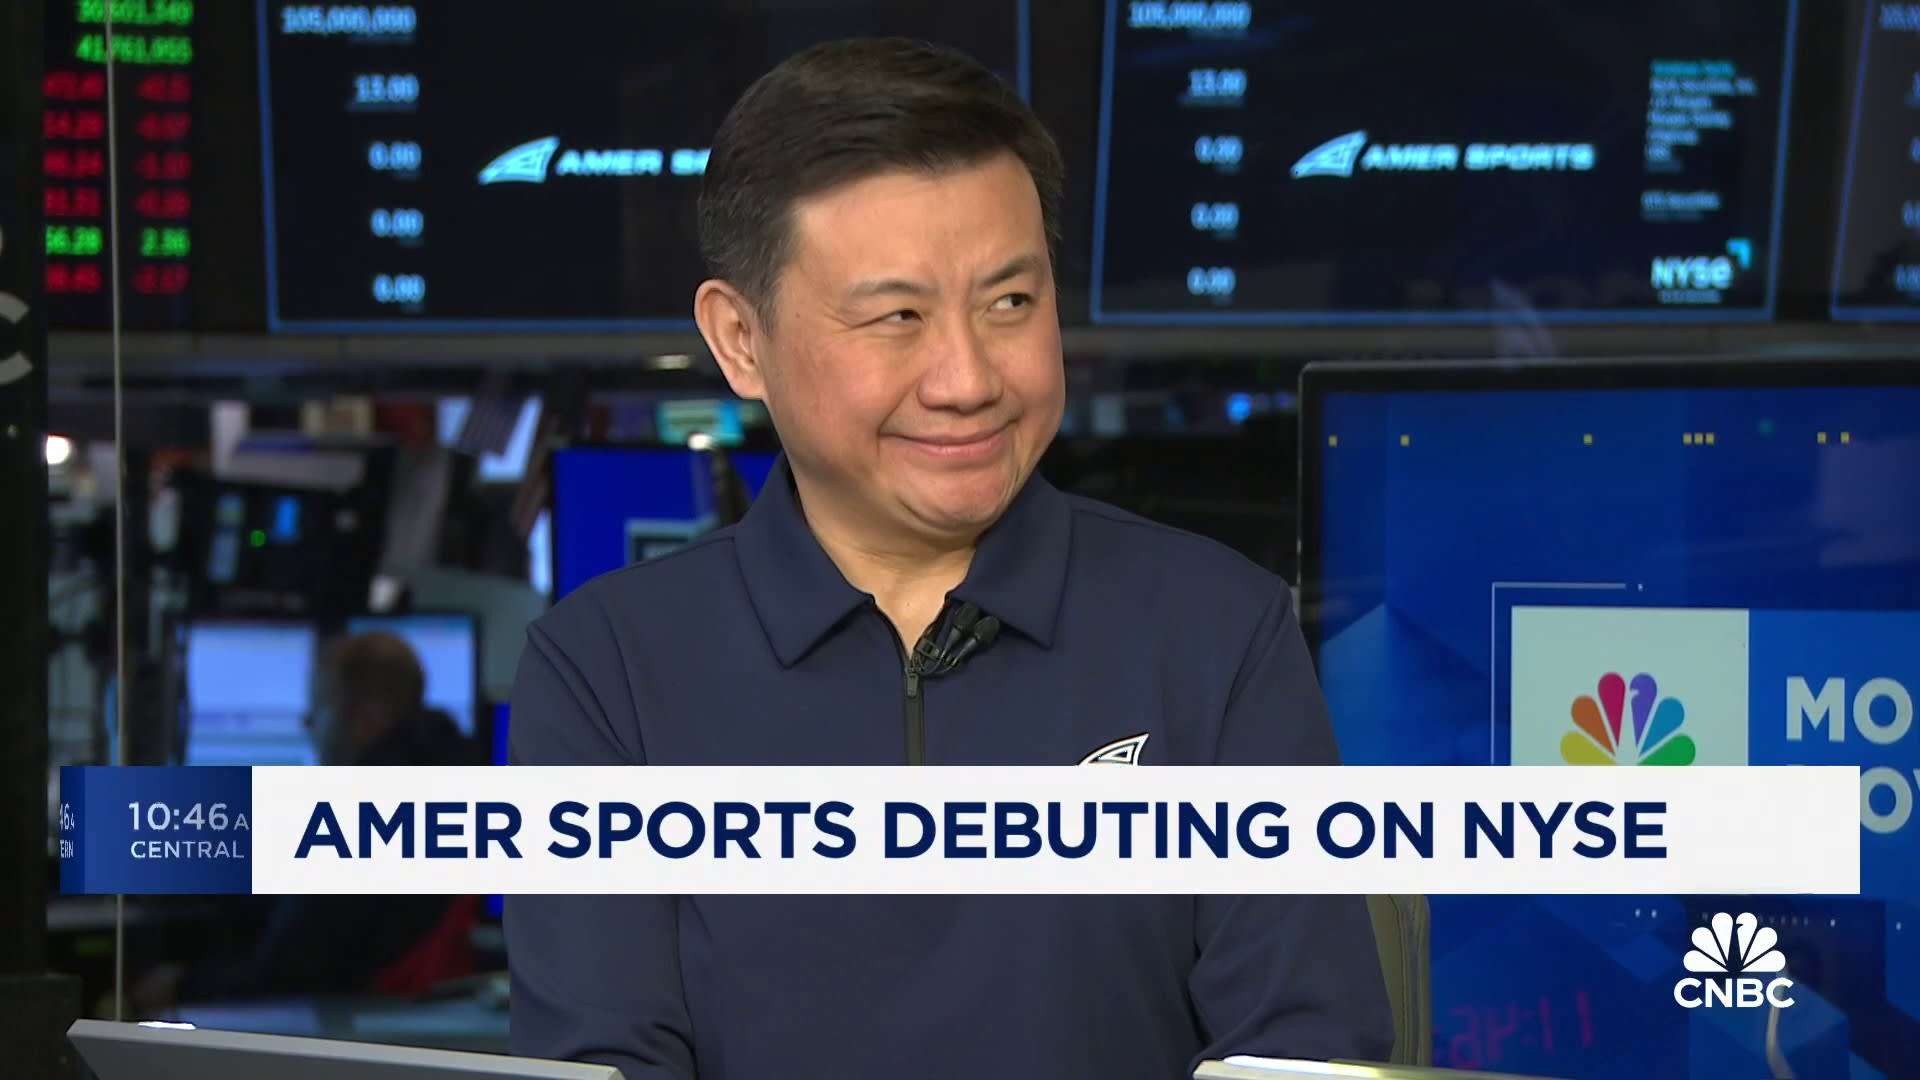 Amer Sports debuting on NYSE